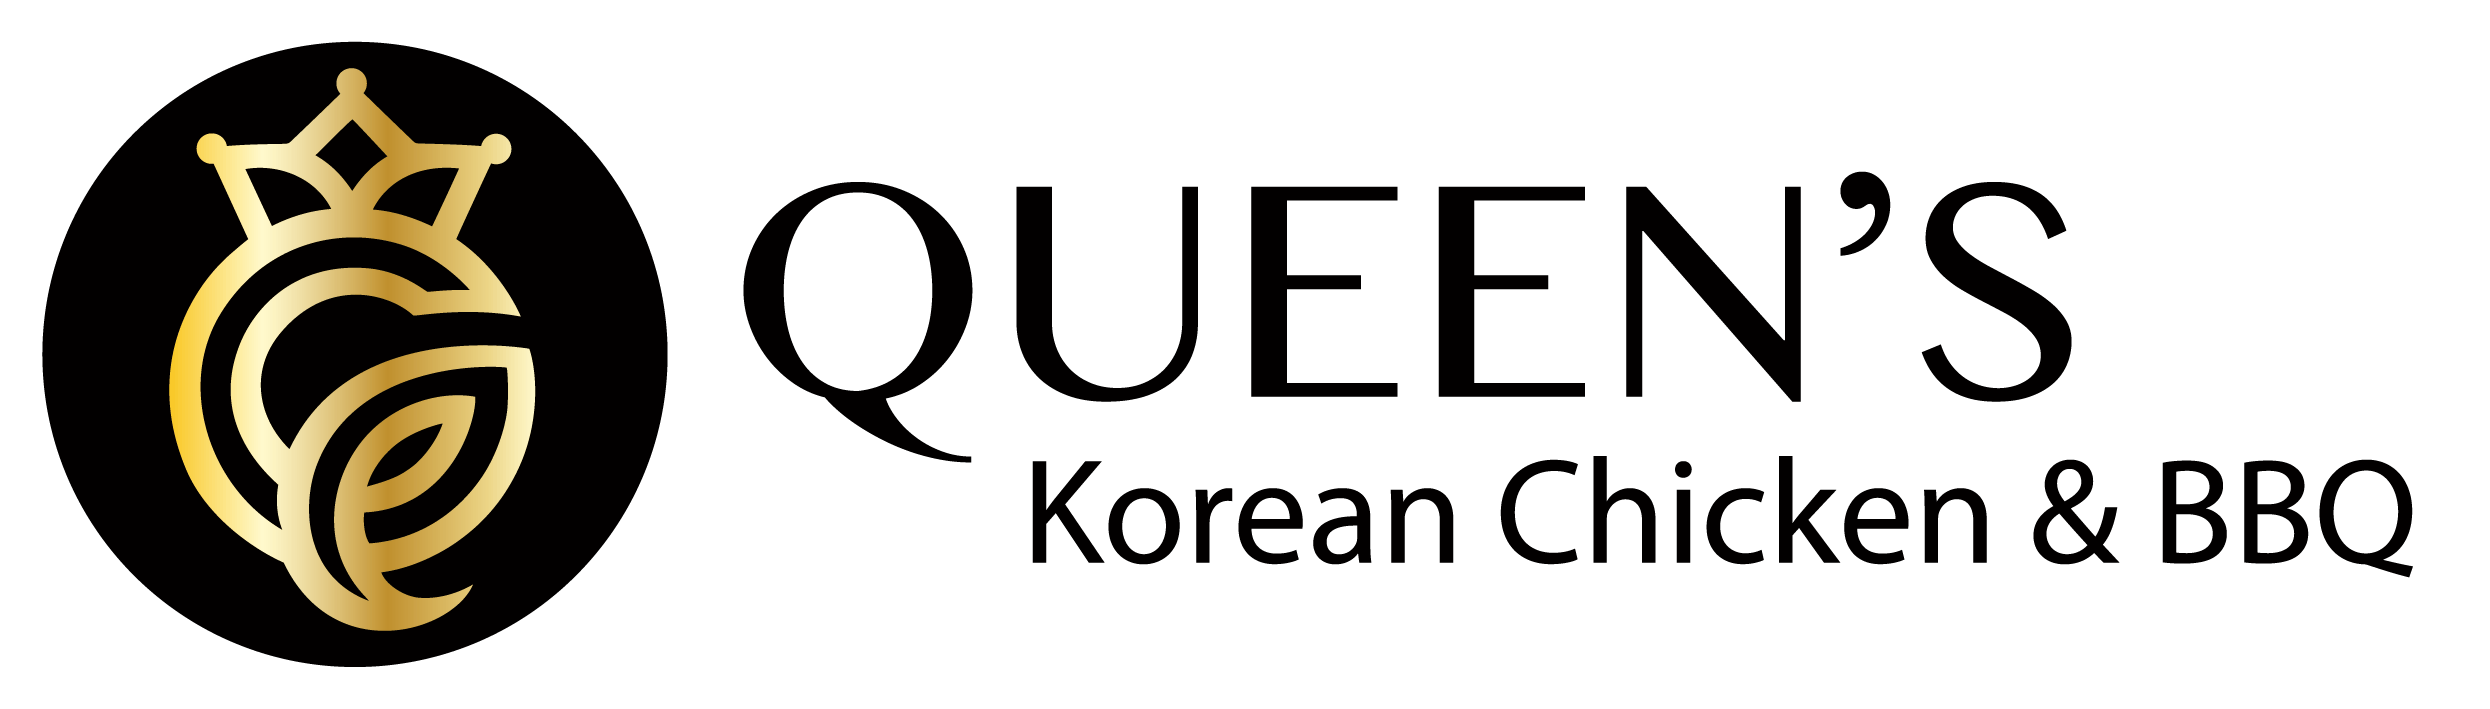 Queen's Korean Chicken & BBQ